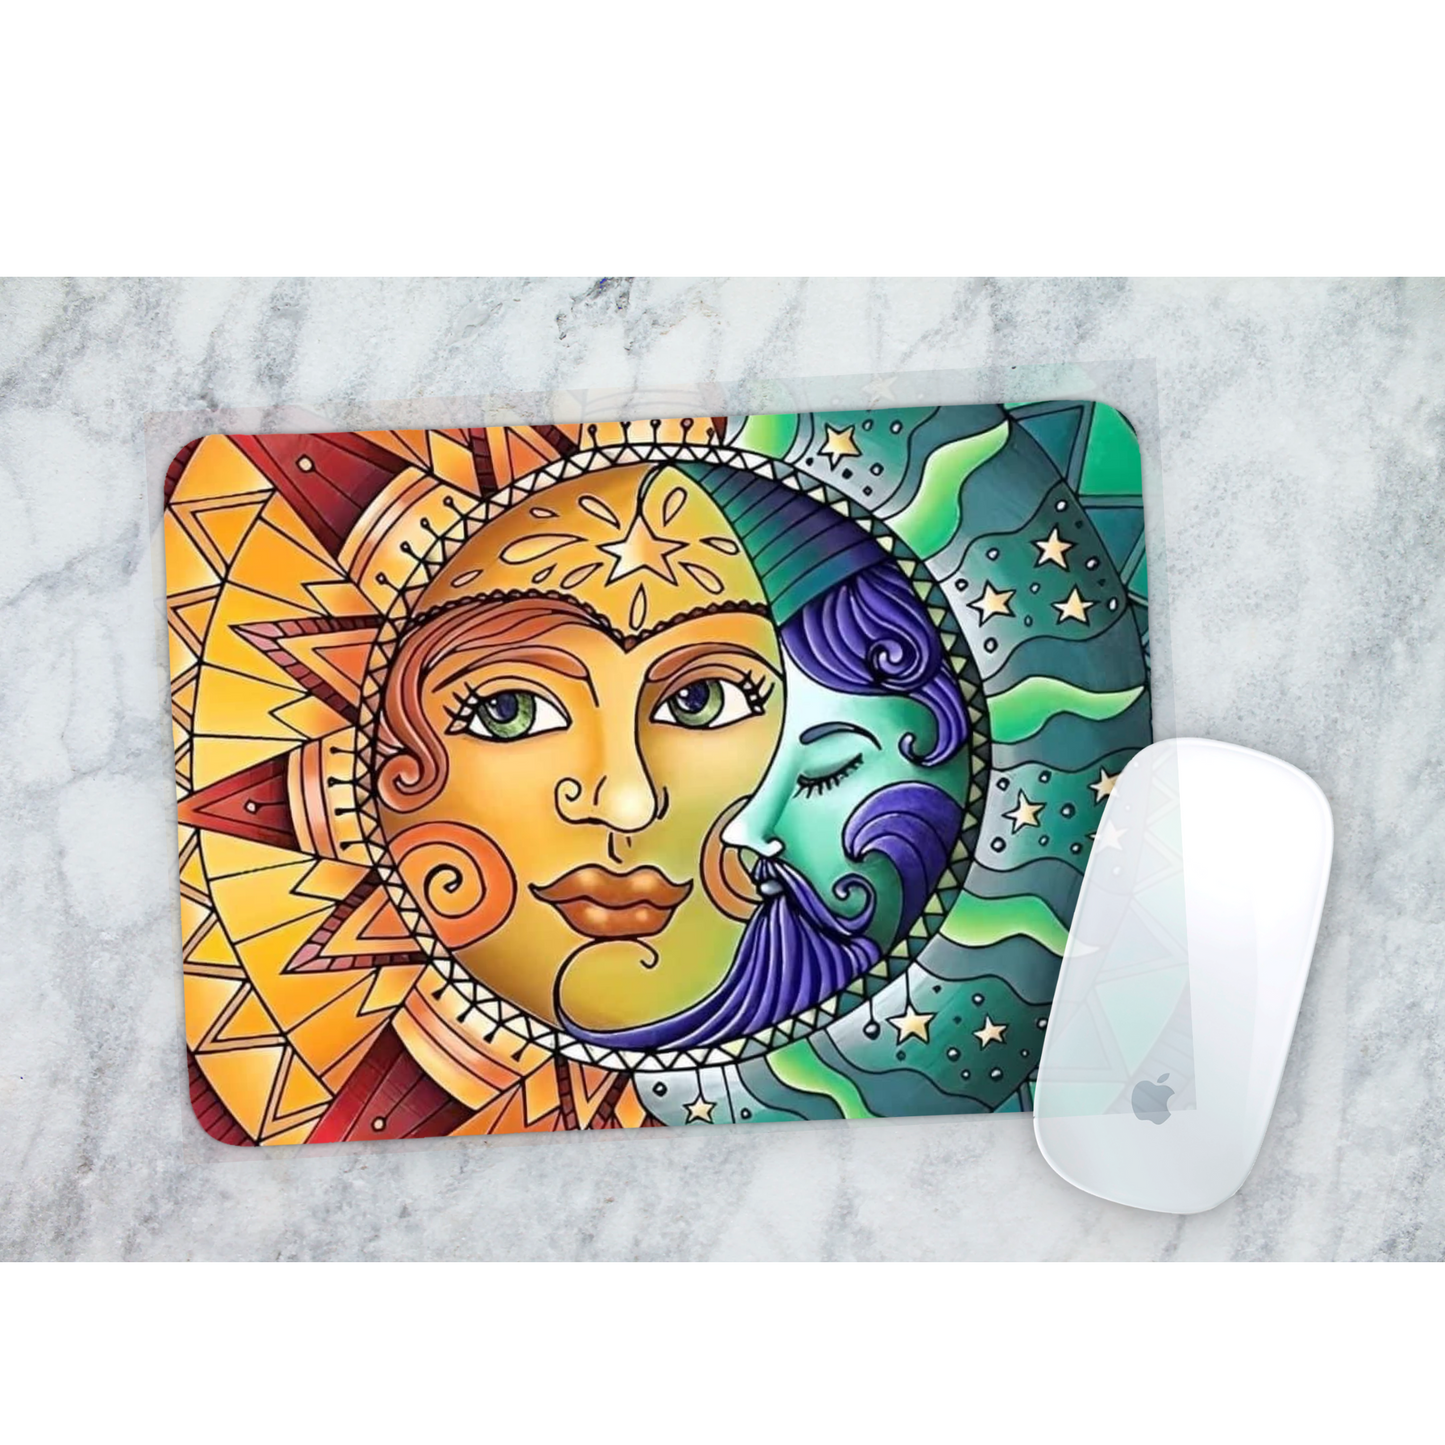 Premium Printed Anti-Slip Mouse Mat - Ultra Durable Sun & Moon Design